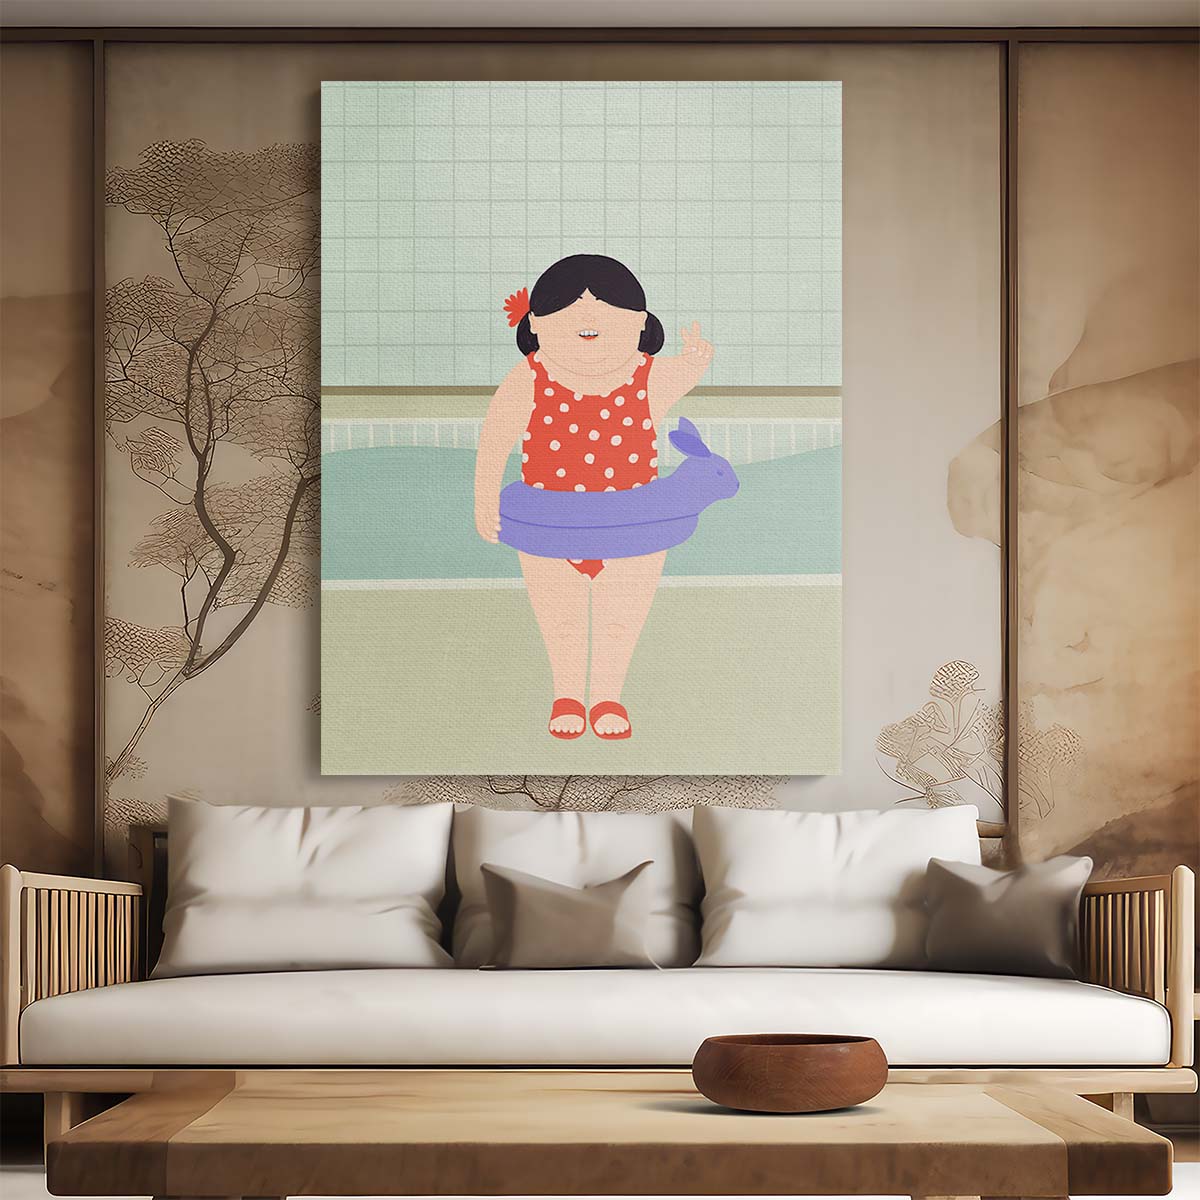 Jota de jai's Joyful Girl Swimming Illustration, Abstract Polka Dot Artwork by Luxuriance Designs, made in USA